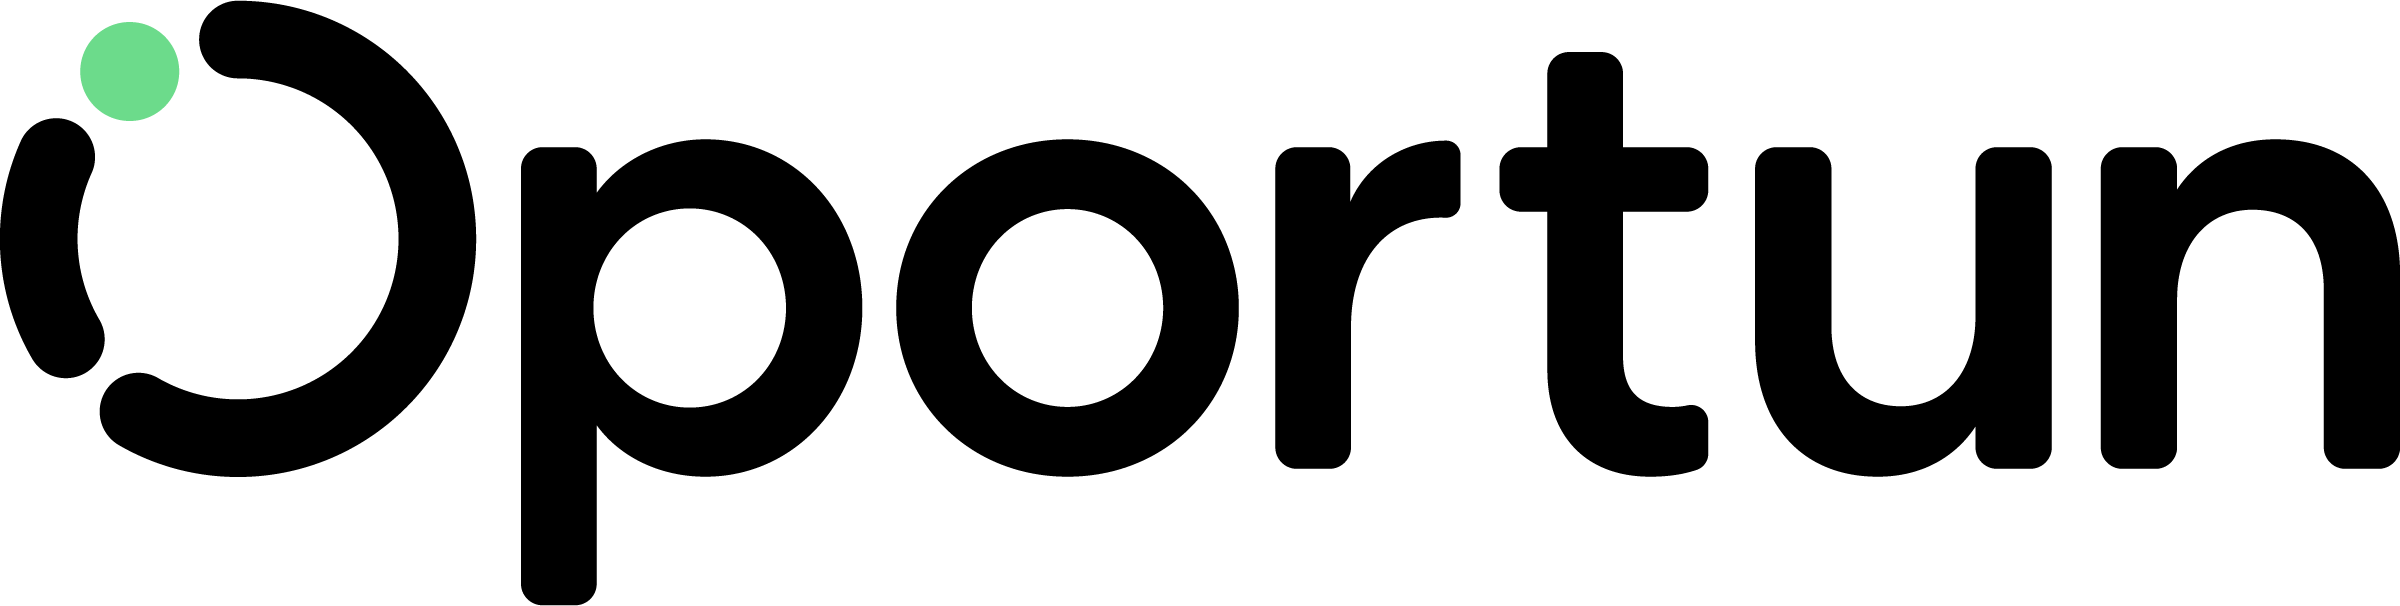 Oportun Company Logo